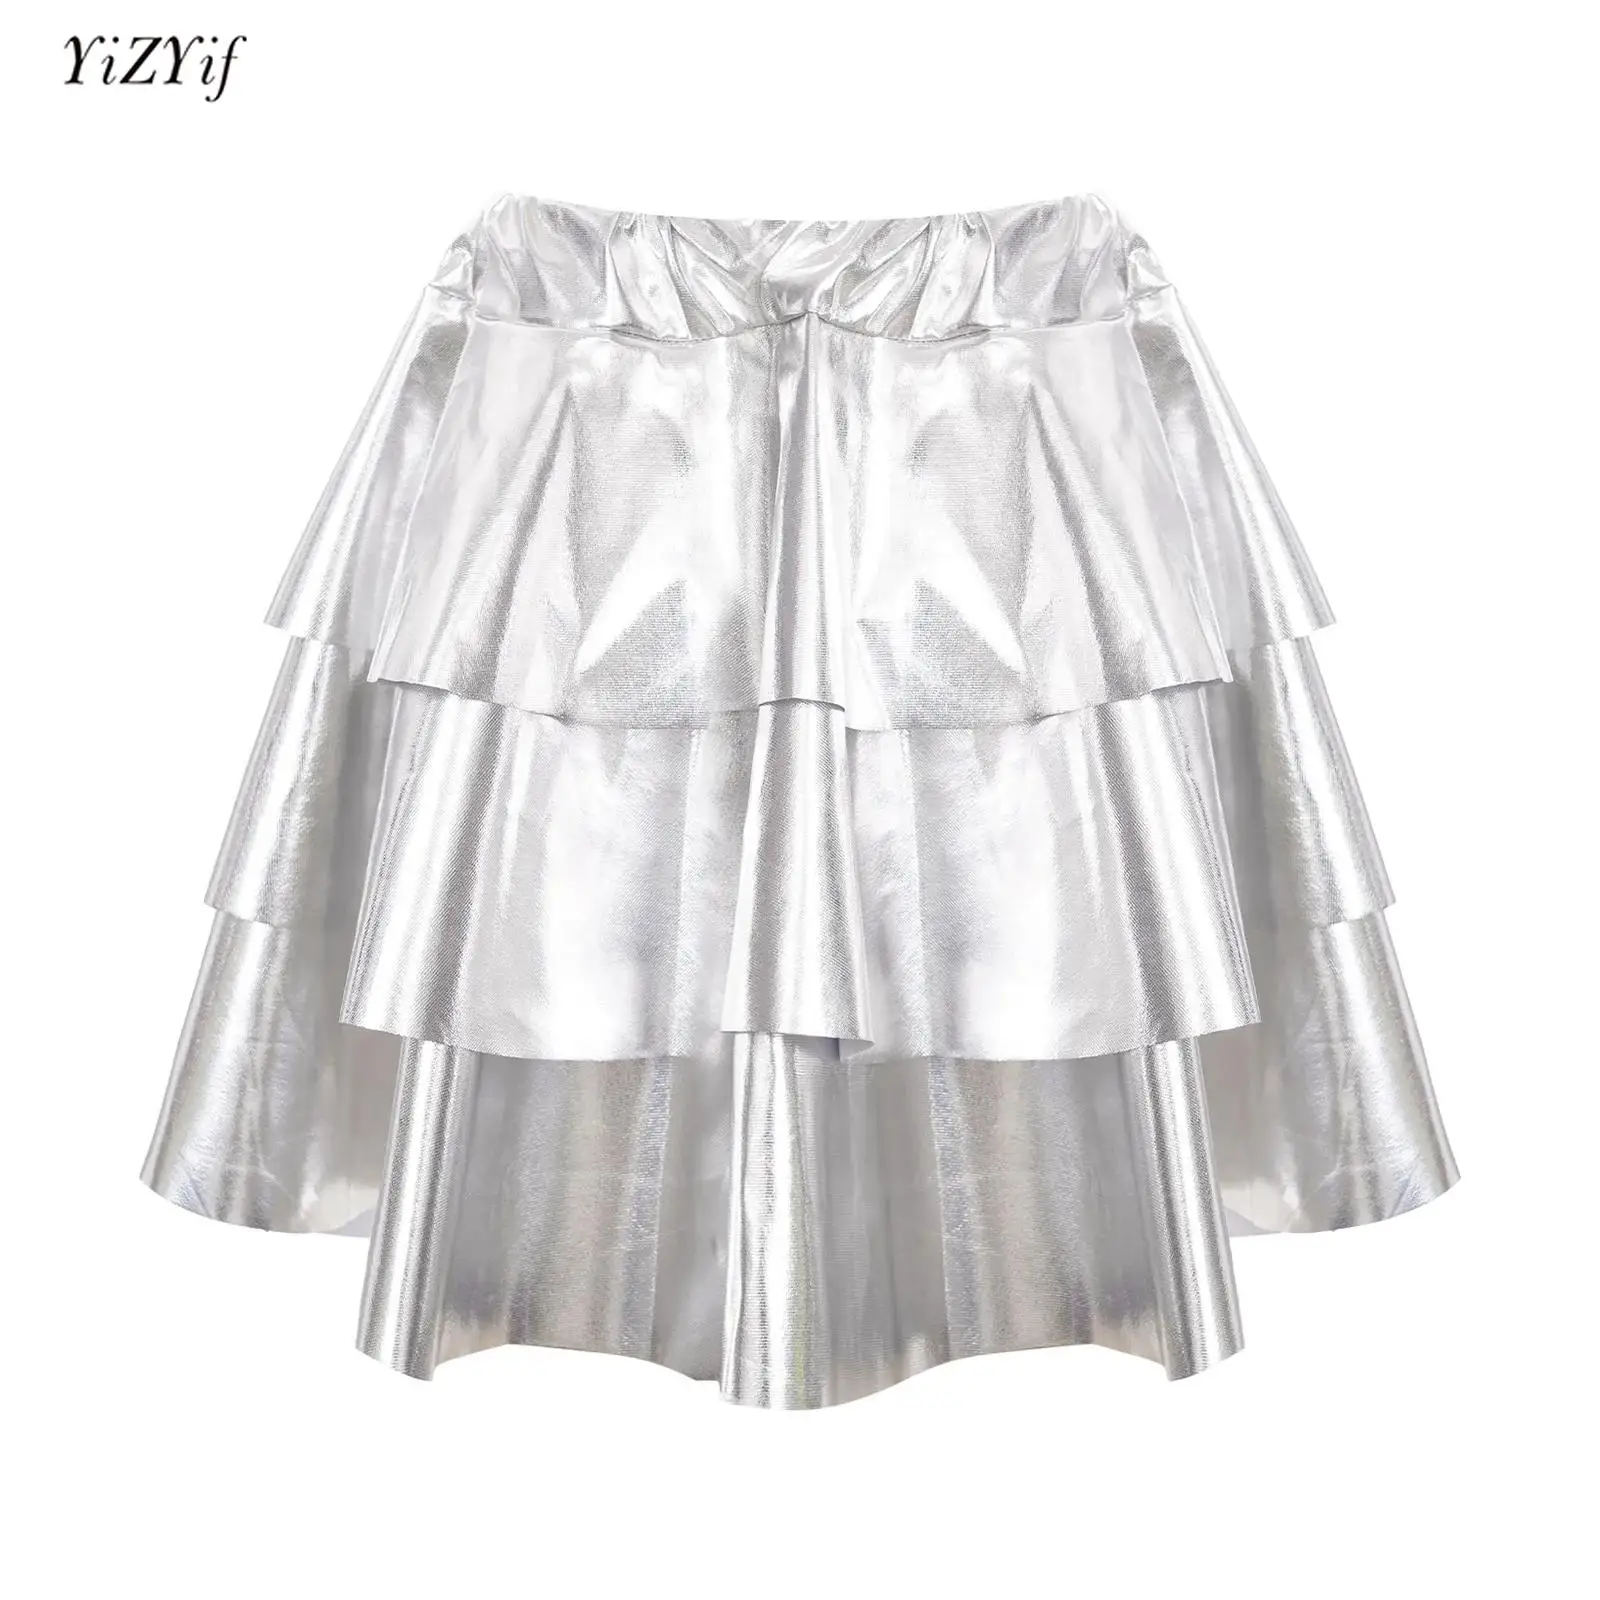 

Kids Girls Skirts Jazz Hip Hop Dancewear Fashion Shiny Metallic Layered Ruffled Skirt Carnival Party Stage Performance Costume